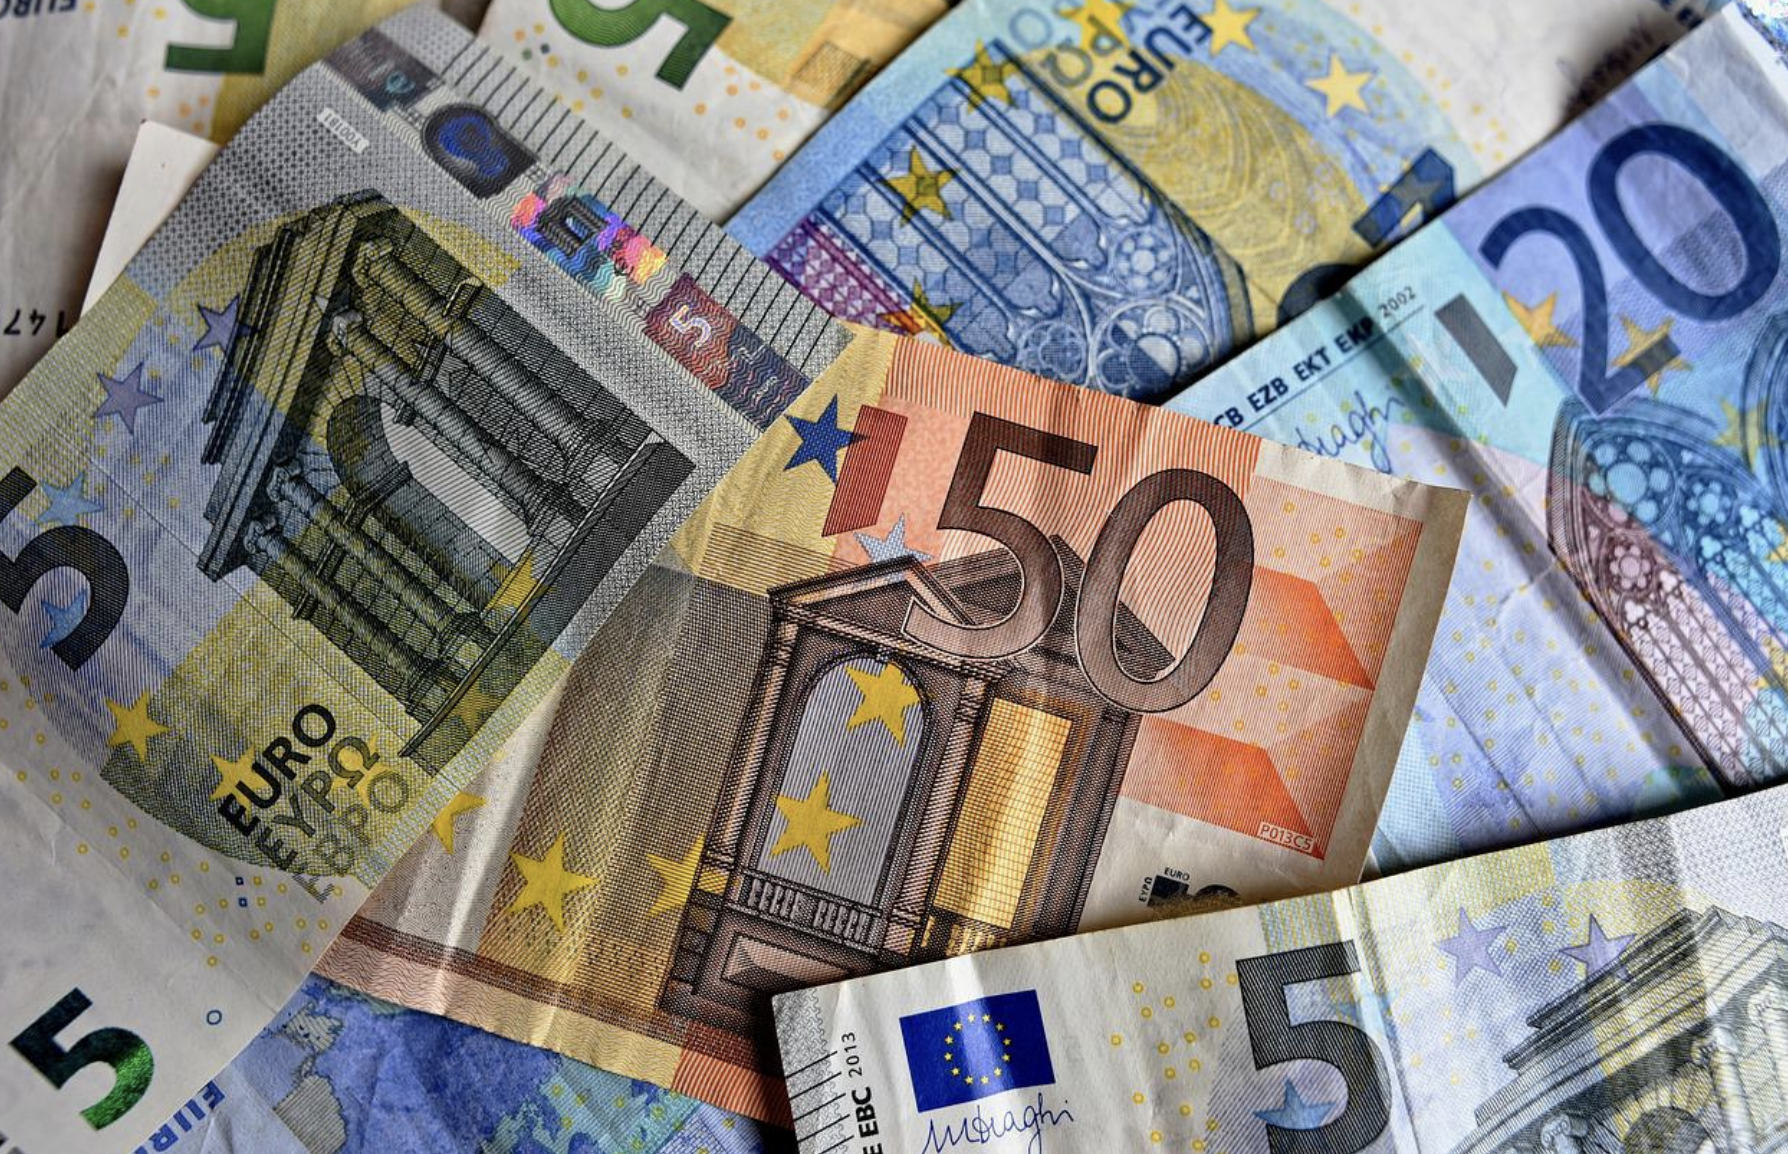 Euro currency. Банкноты евро. Евро валюта. Евро фото. Денежные купюры евро.